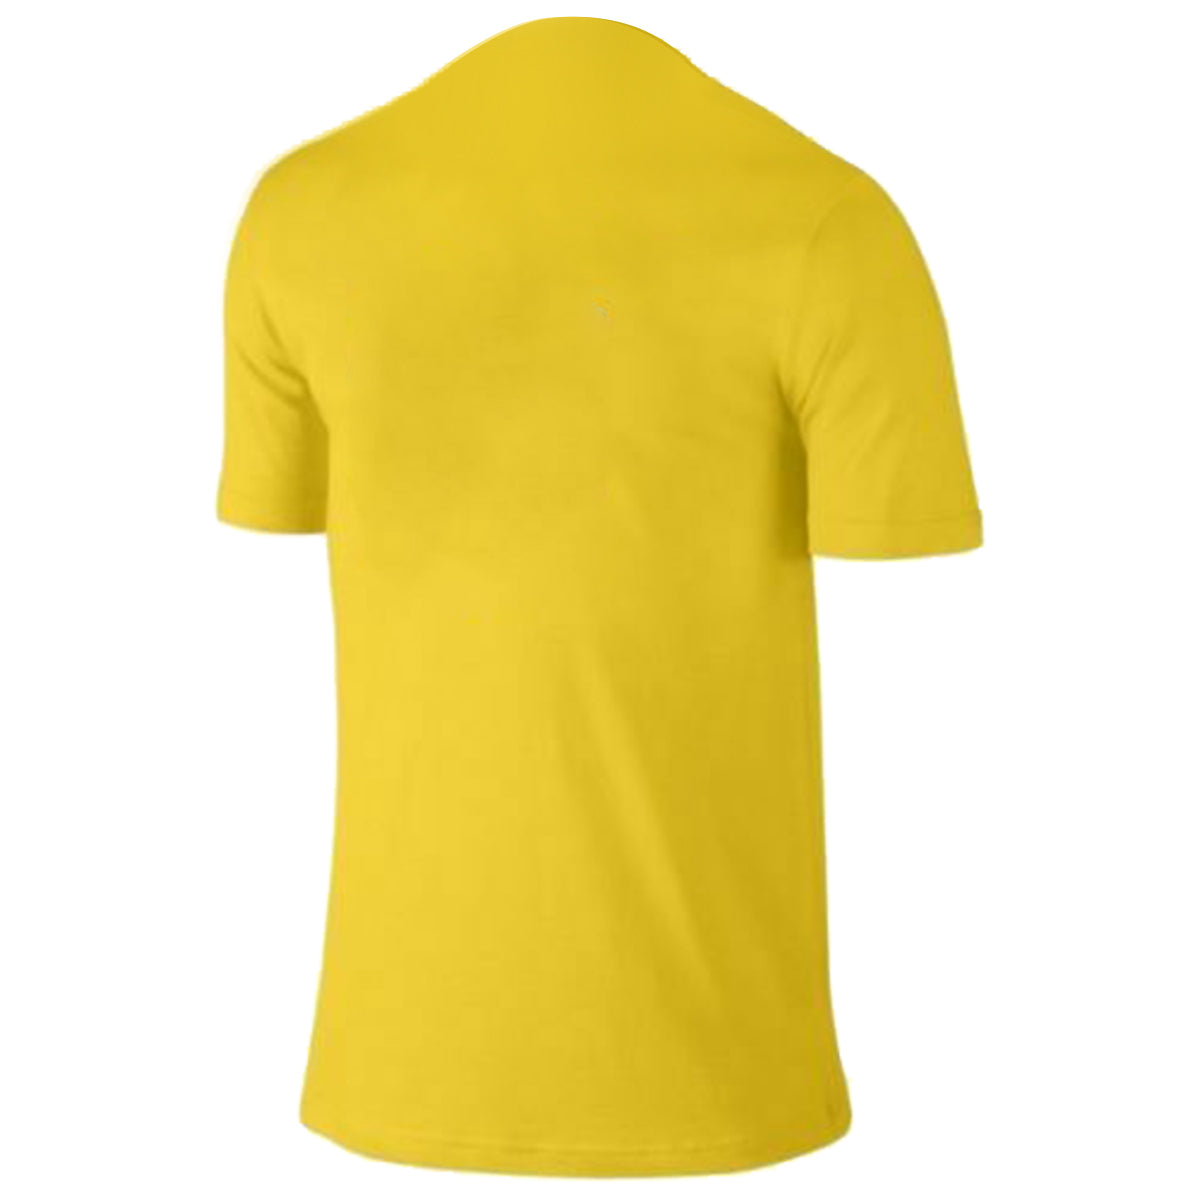 Nike Kd 35 T-shirt Mens Style : 546163